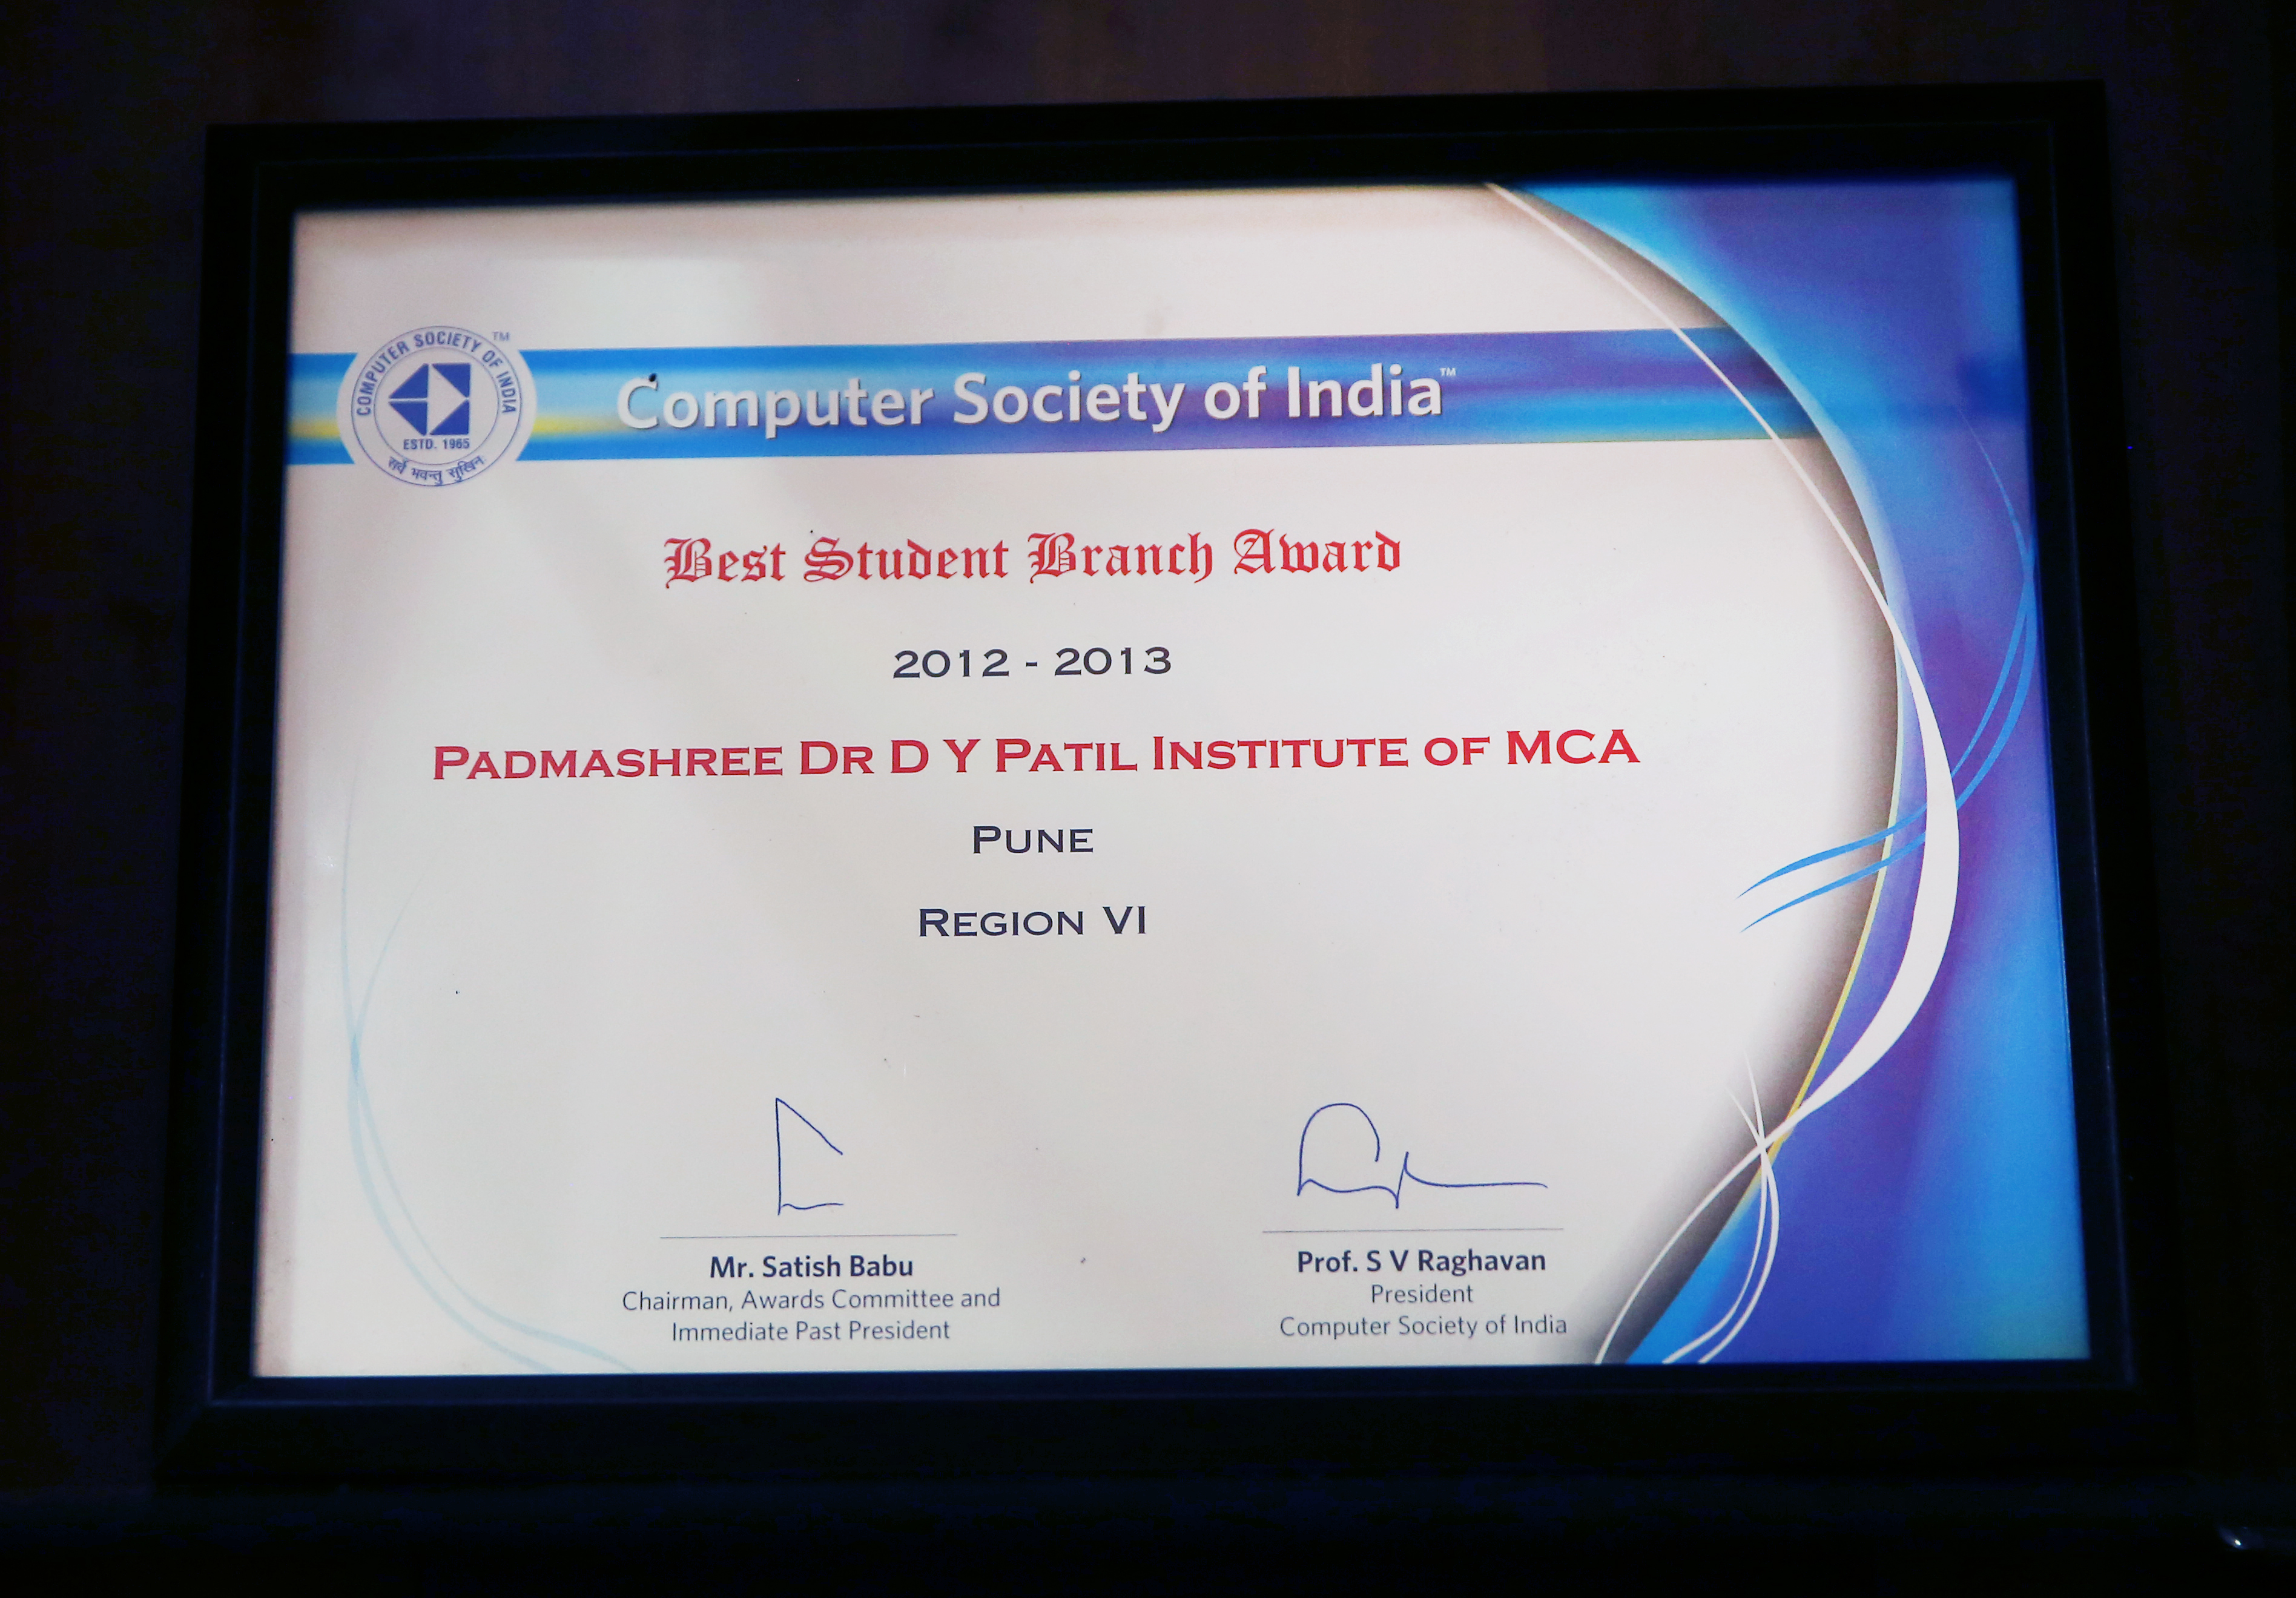 BestAccreditedStudentBranchAwardbyComputerSocietyofIndiain2014.jpg